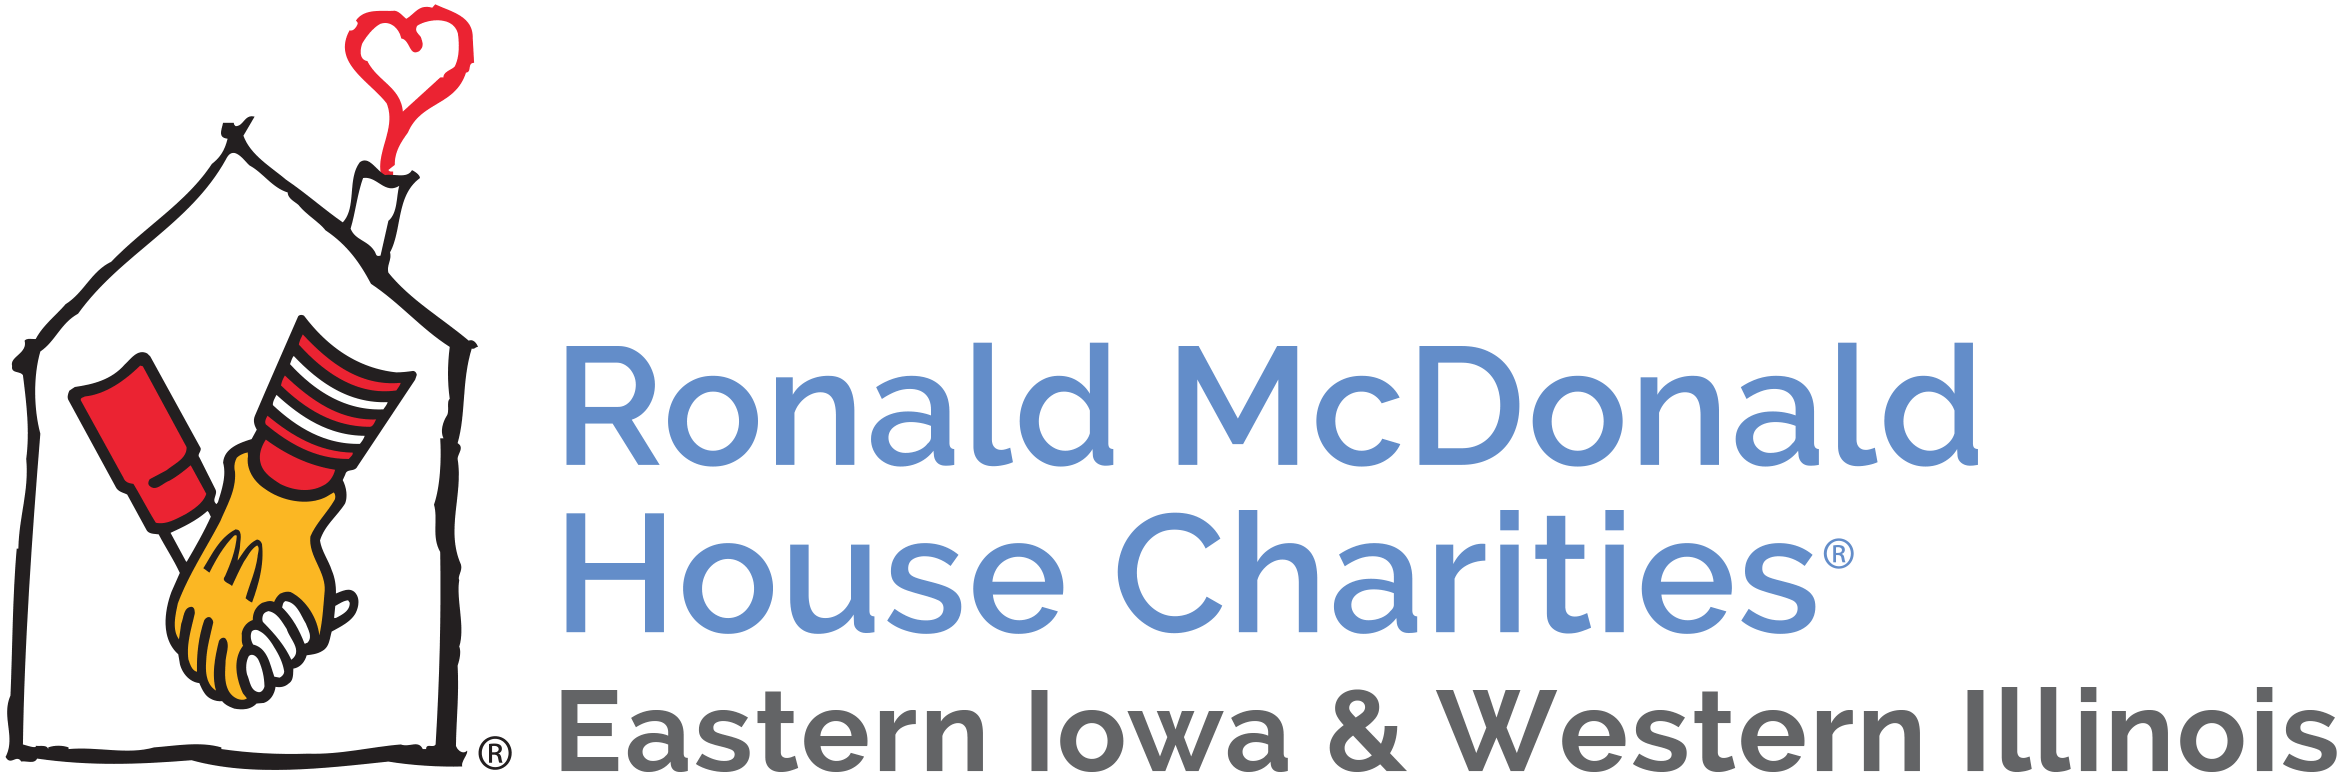 CR-Ronald-McDonald-House-Charities-Logo.png